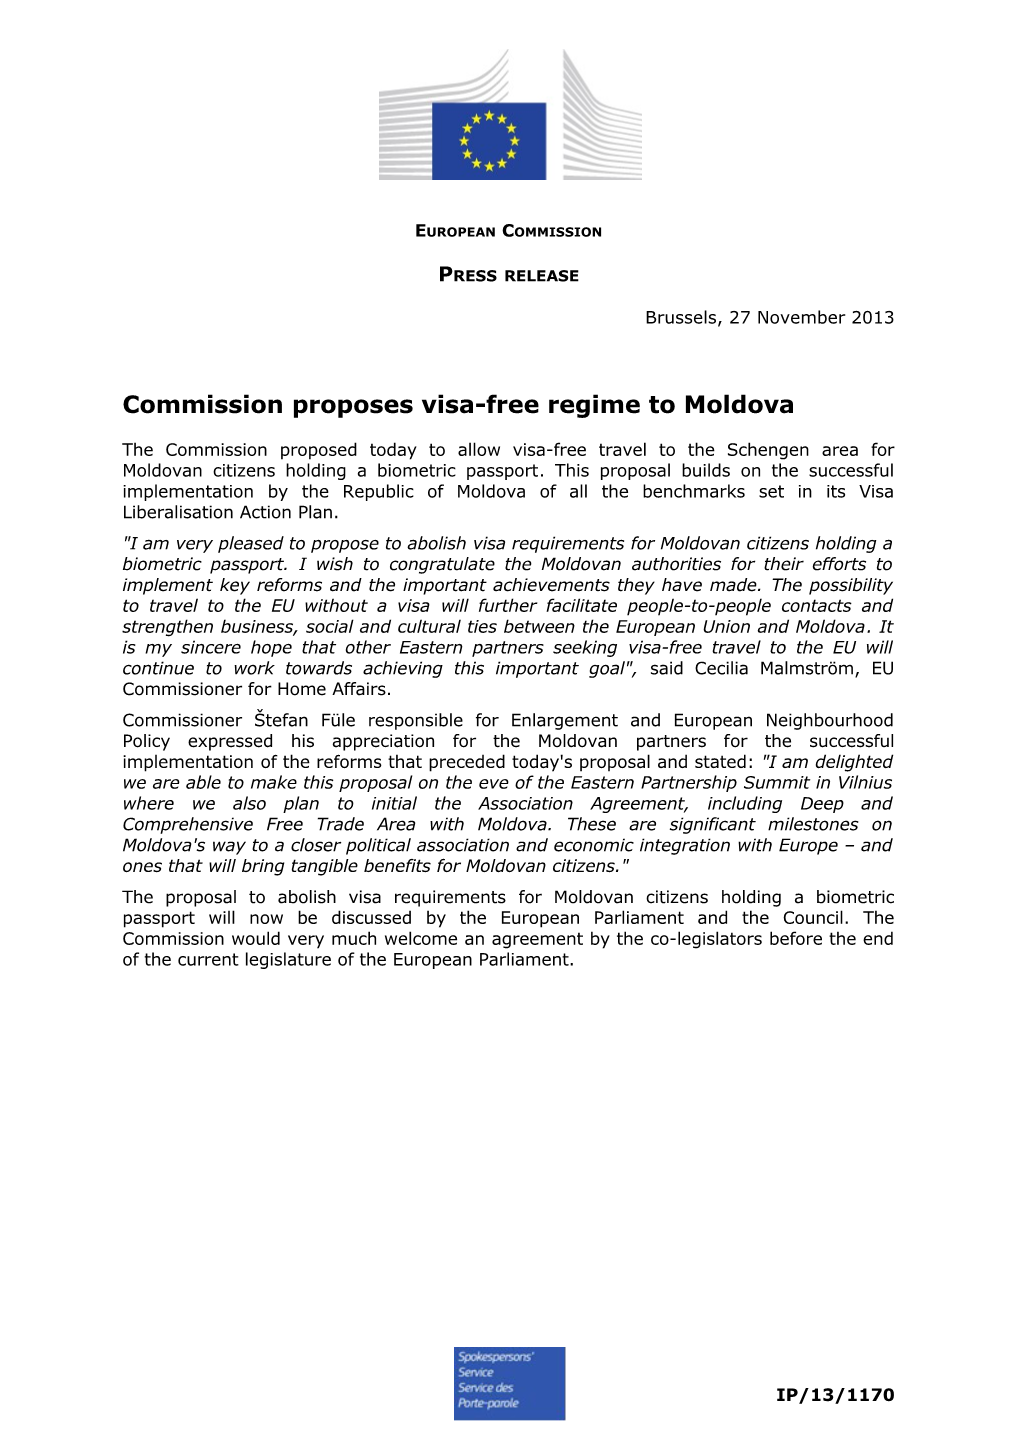 Commission Proposes Visa-Free Regime to Moldova